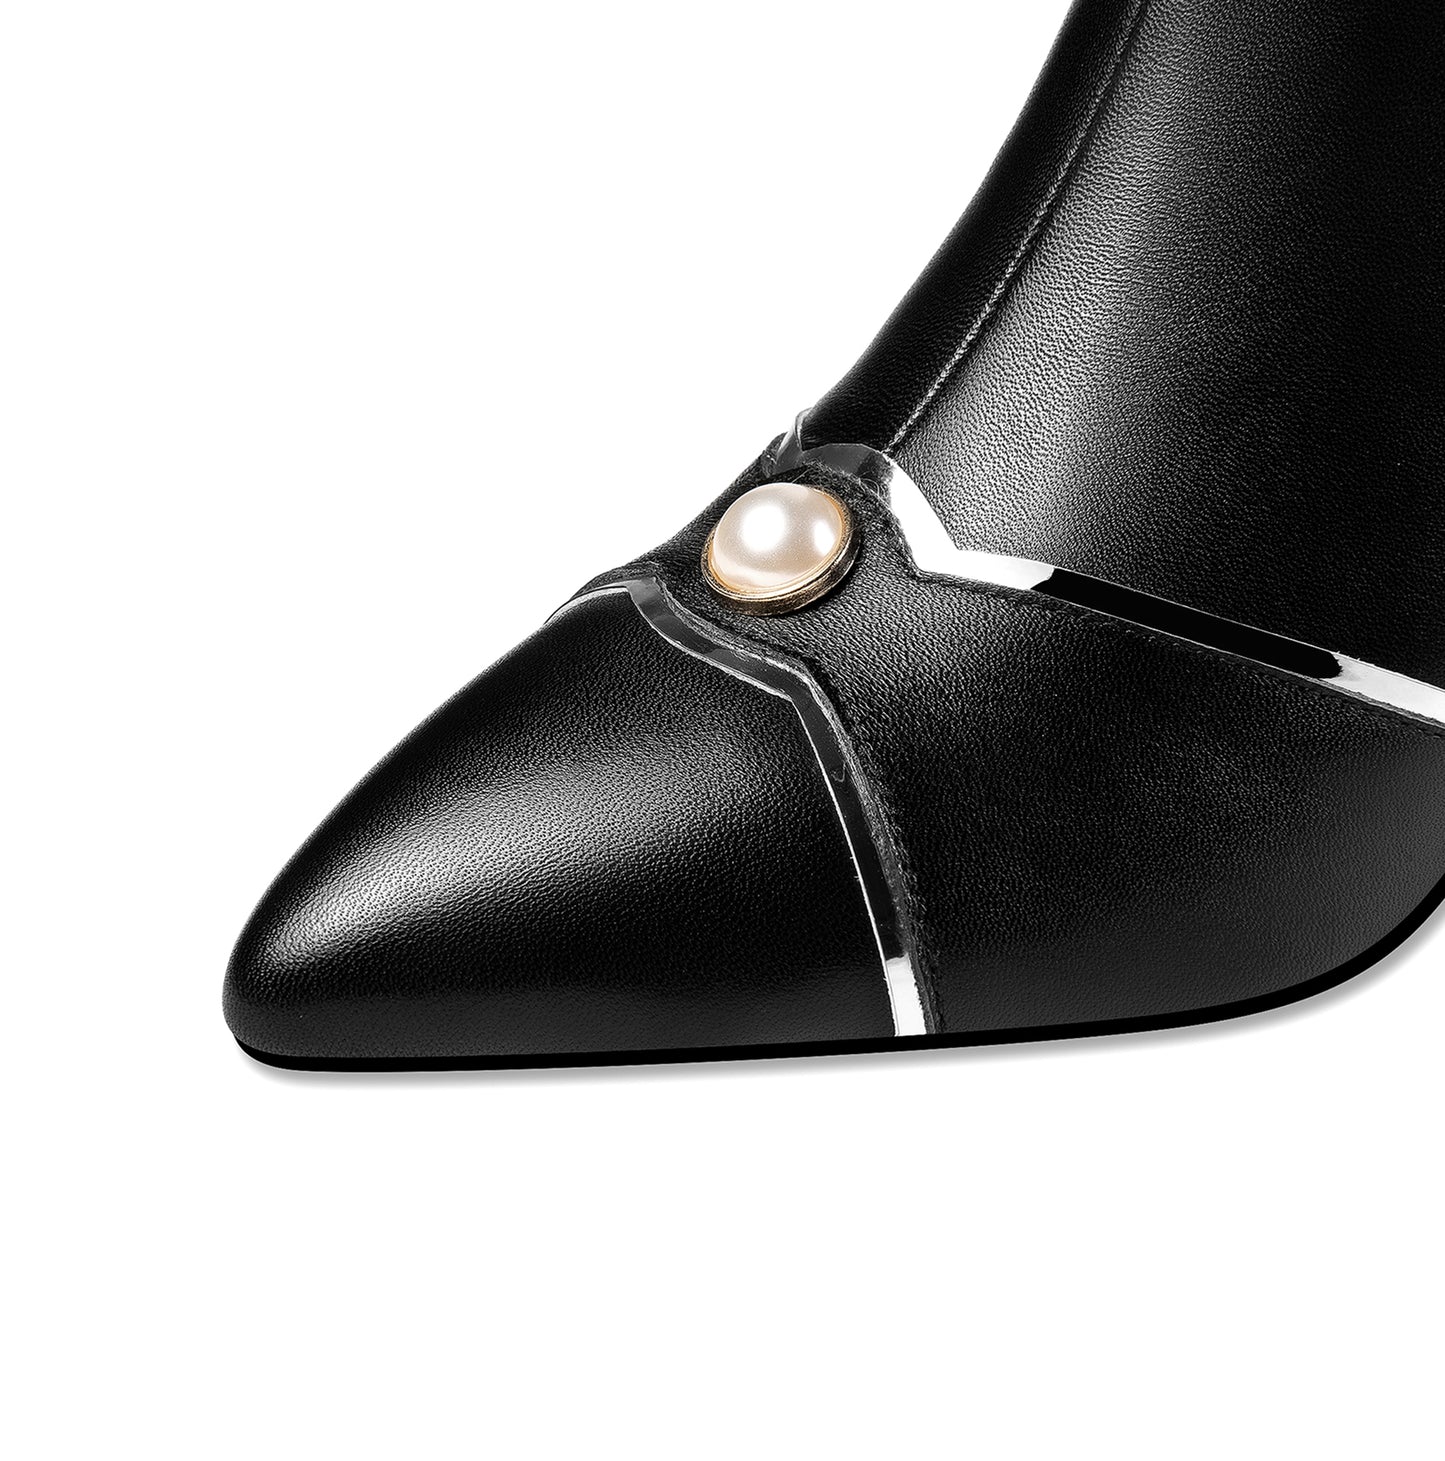 TinaCus Handmade Women's Genuine Leather Side Zip Up Spool Heel Pointed Toe Elegant Ankle Boots